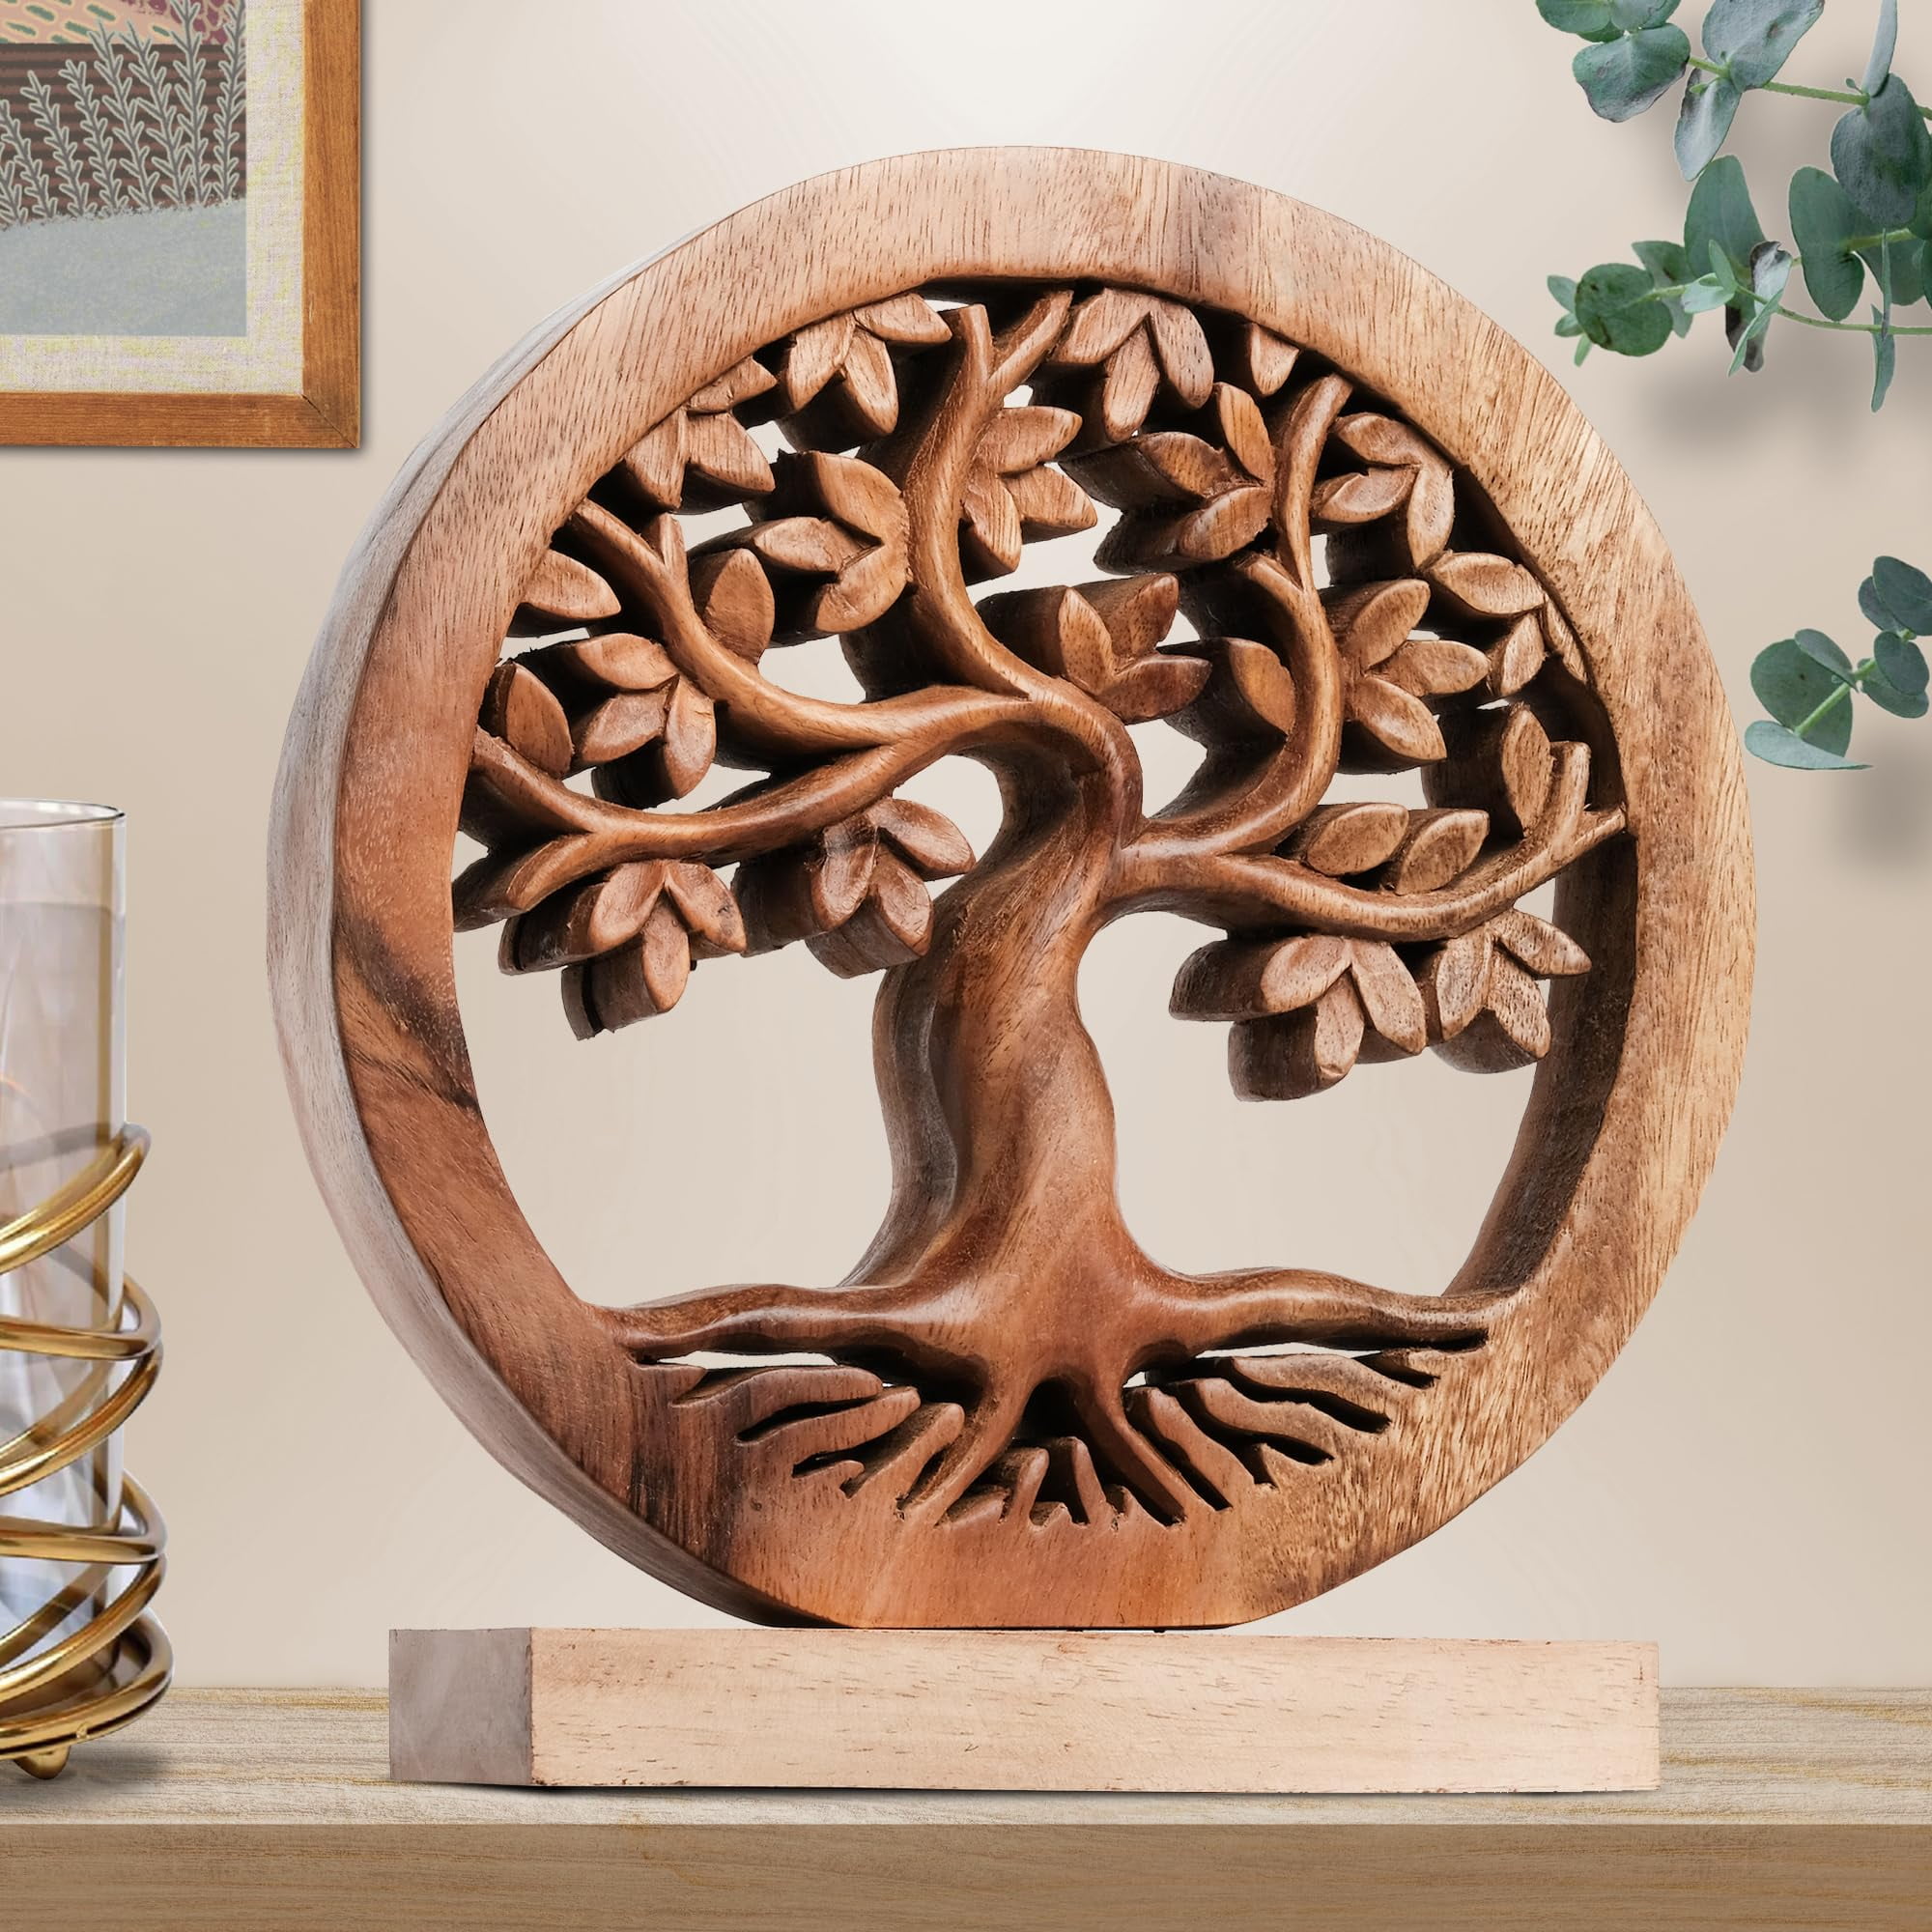 Decozen Home Decor Handmade Wooden Sculpture in Tree of Life Acacia Wood 